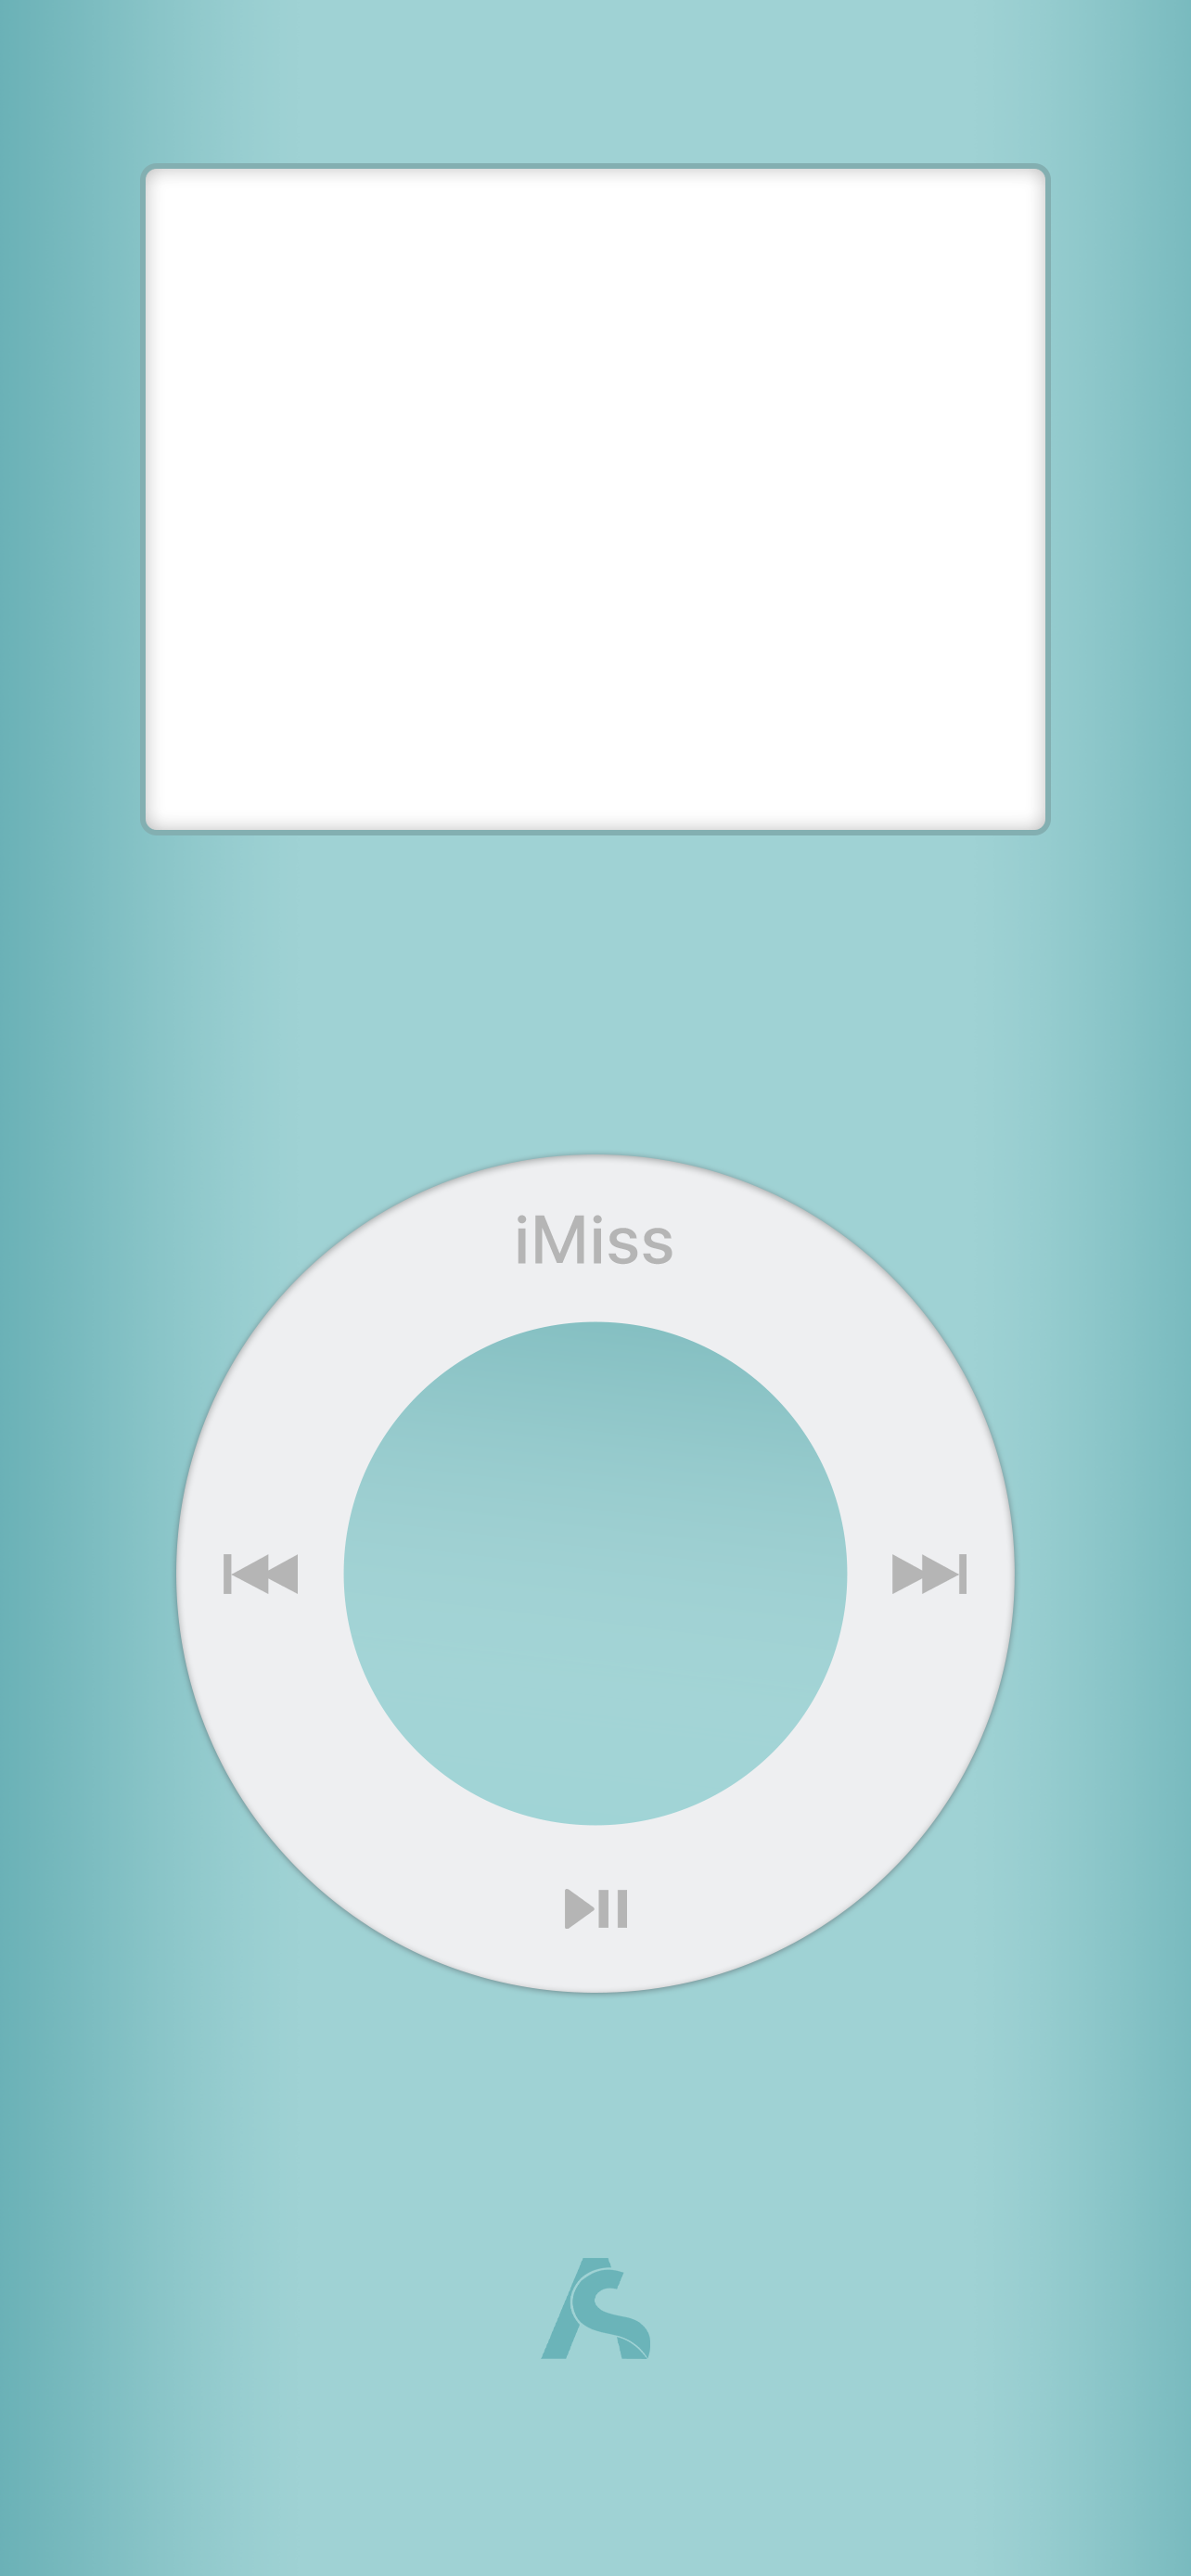 iMiss iPod iPhone Wallpaper